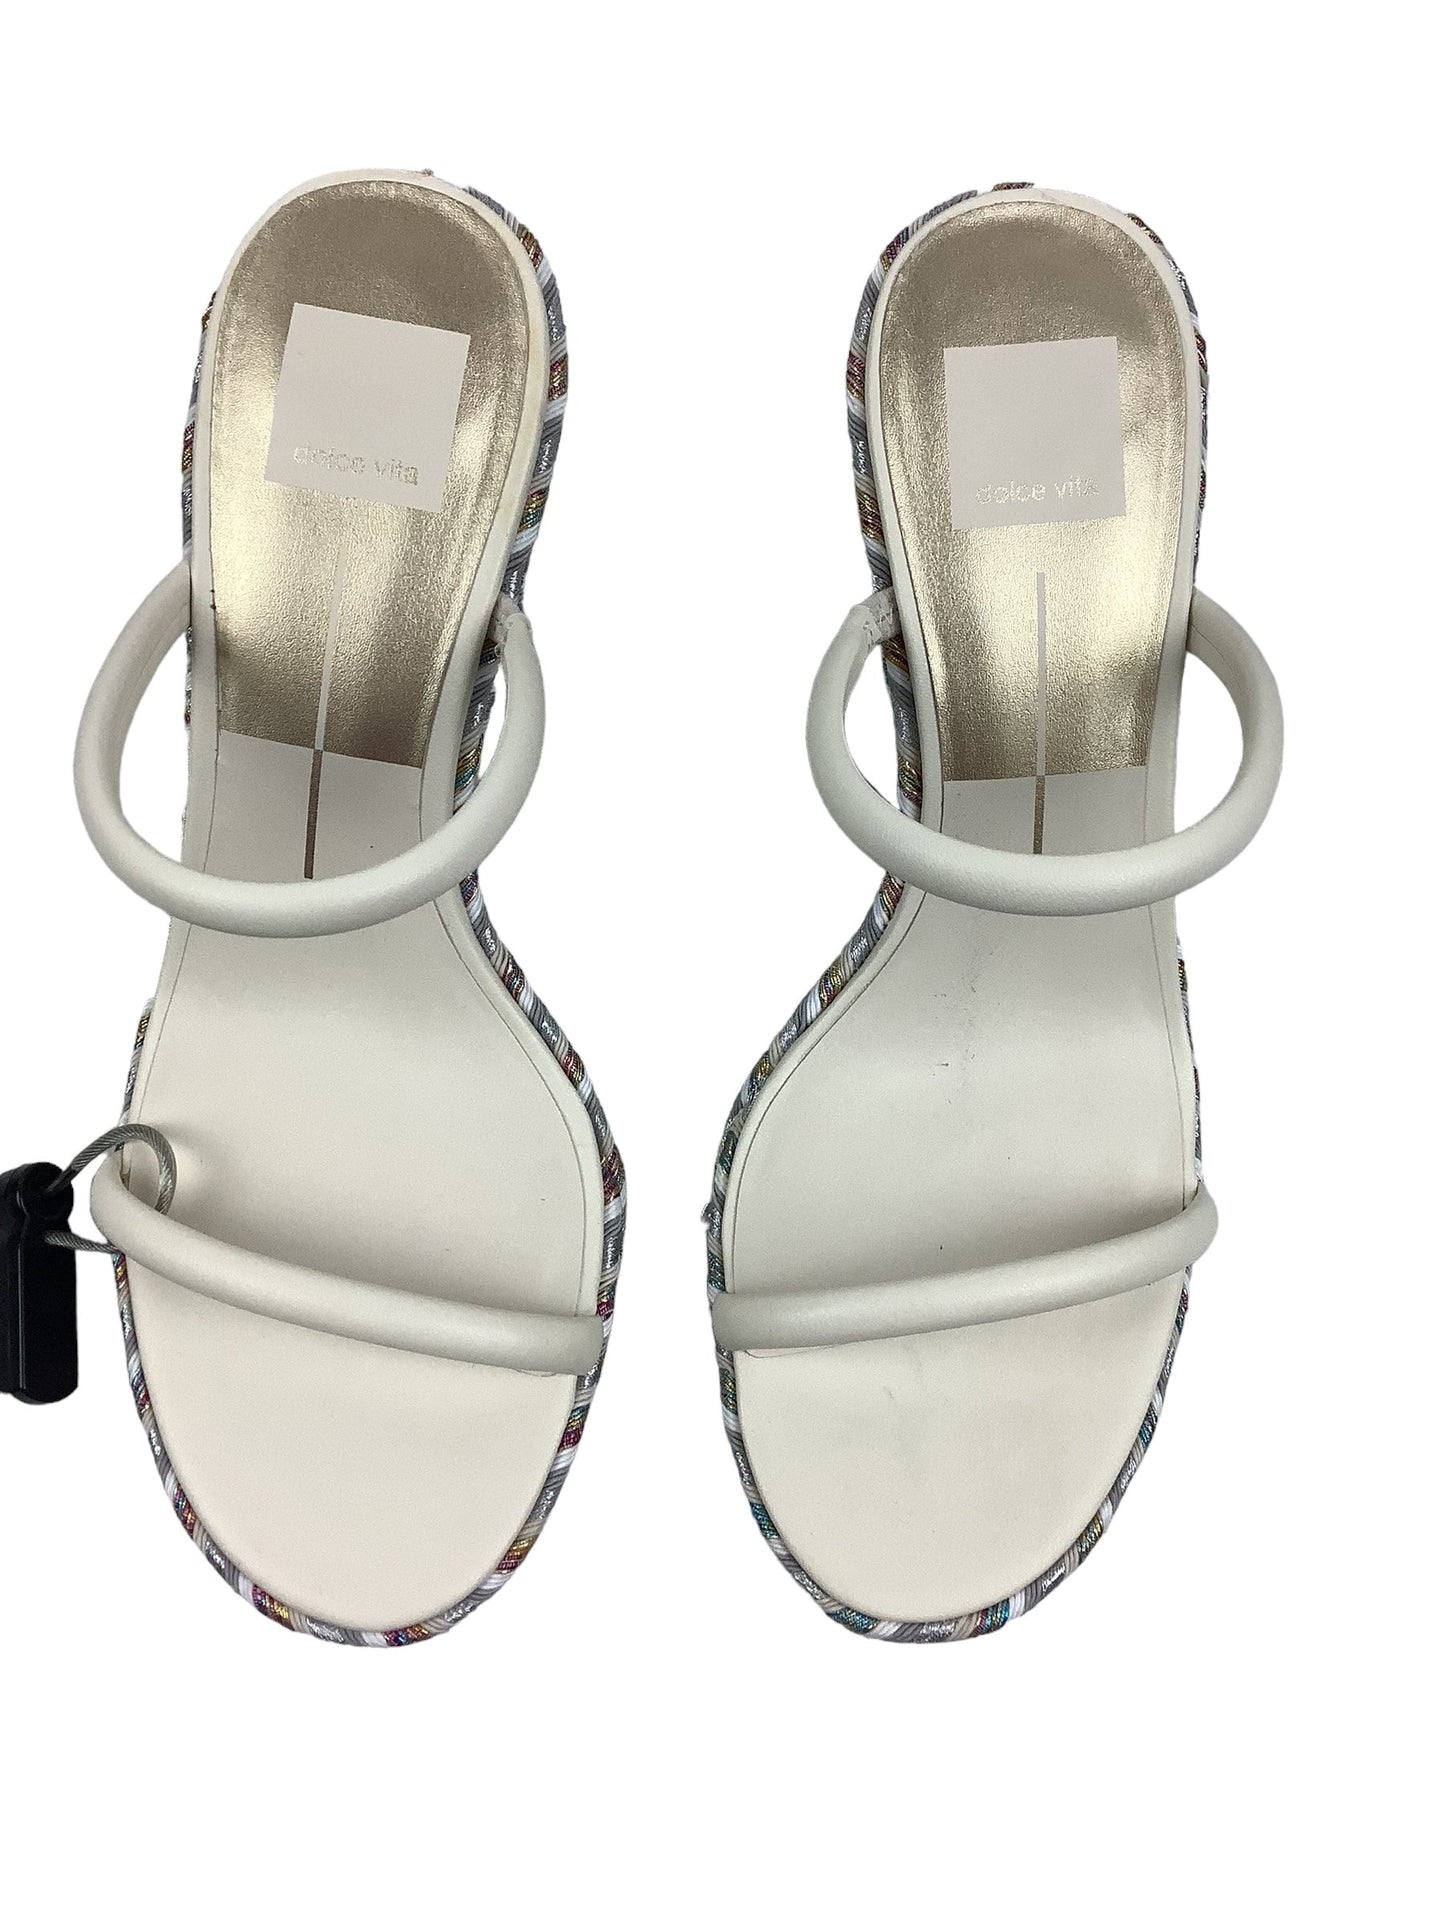 White Sandals Heels Wedge Dolce Vita, Size 8.5